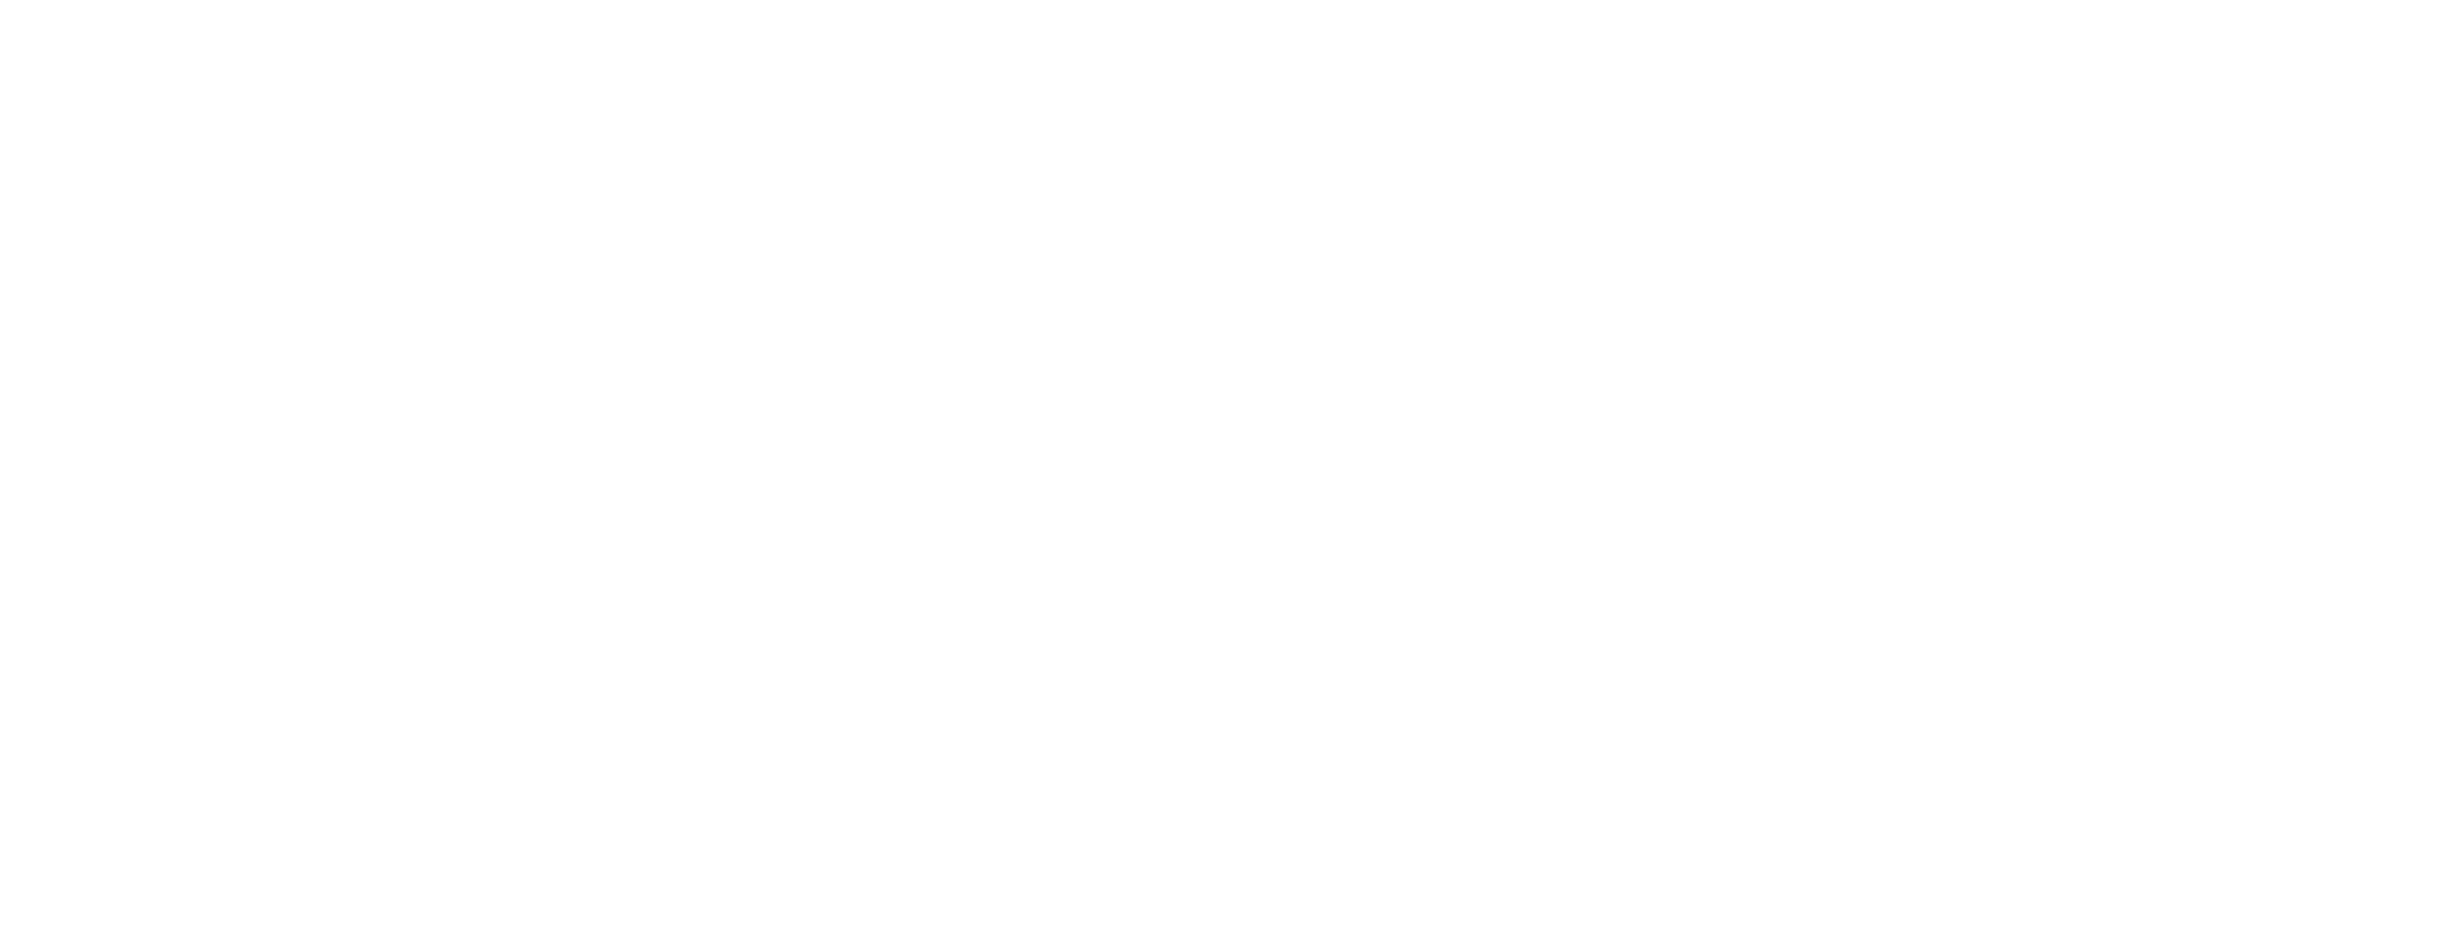 Club Capital Logo image